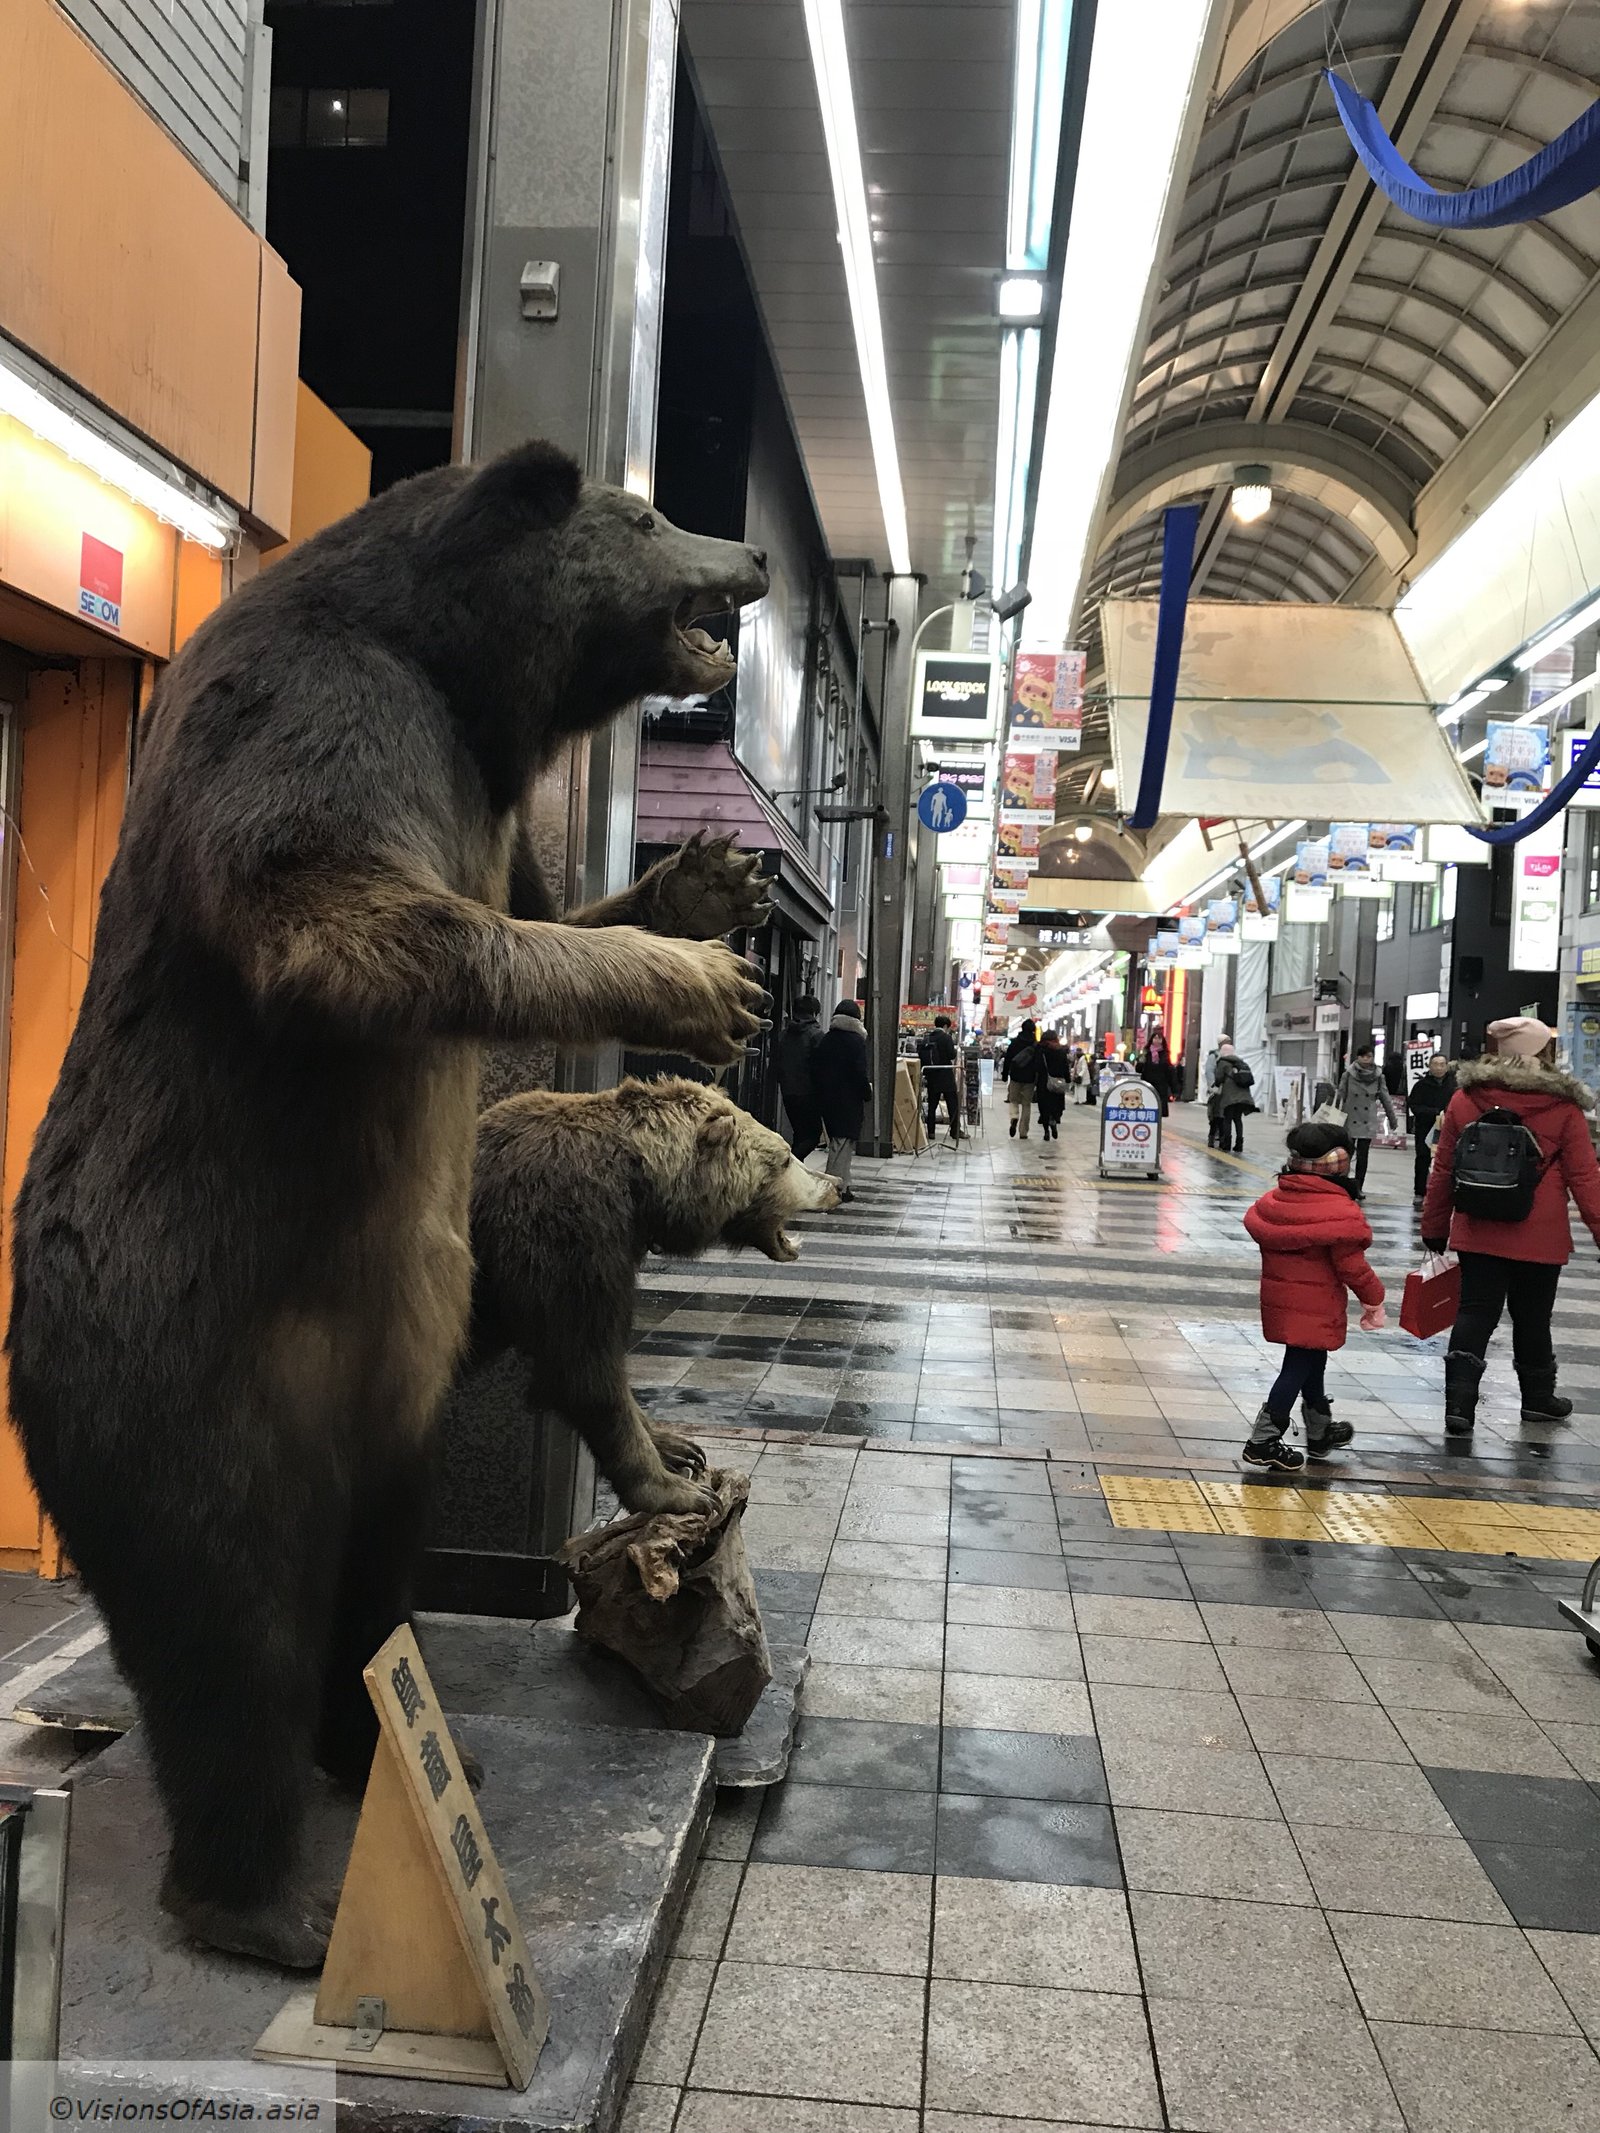 Bear in Tanukikoji